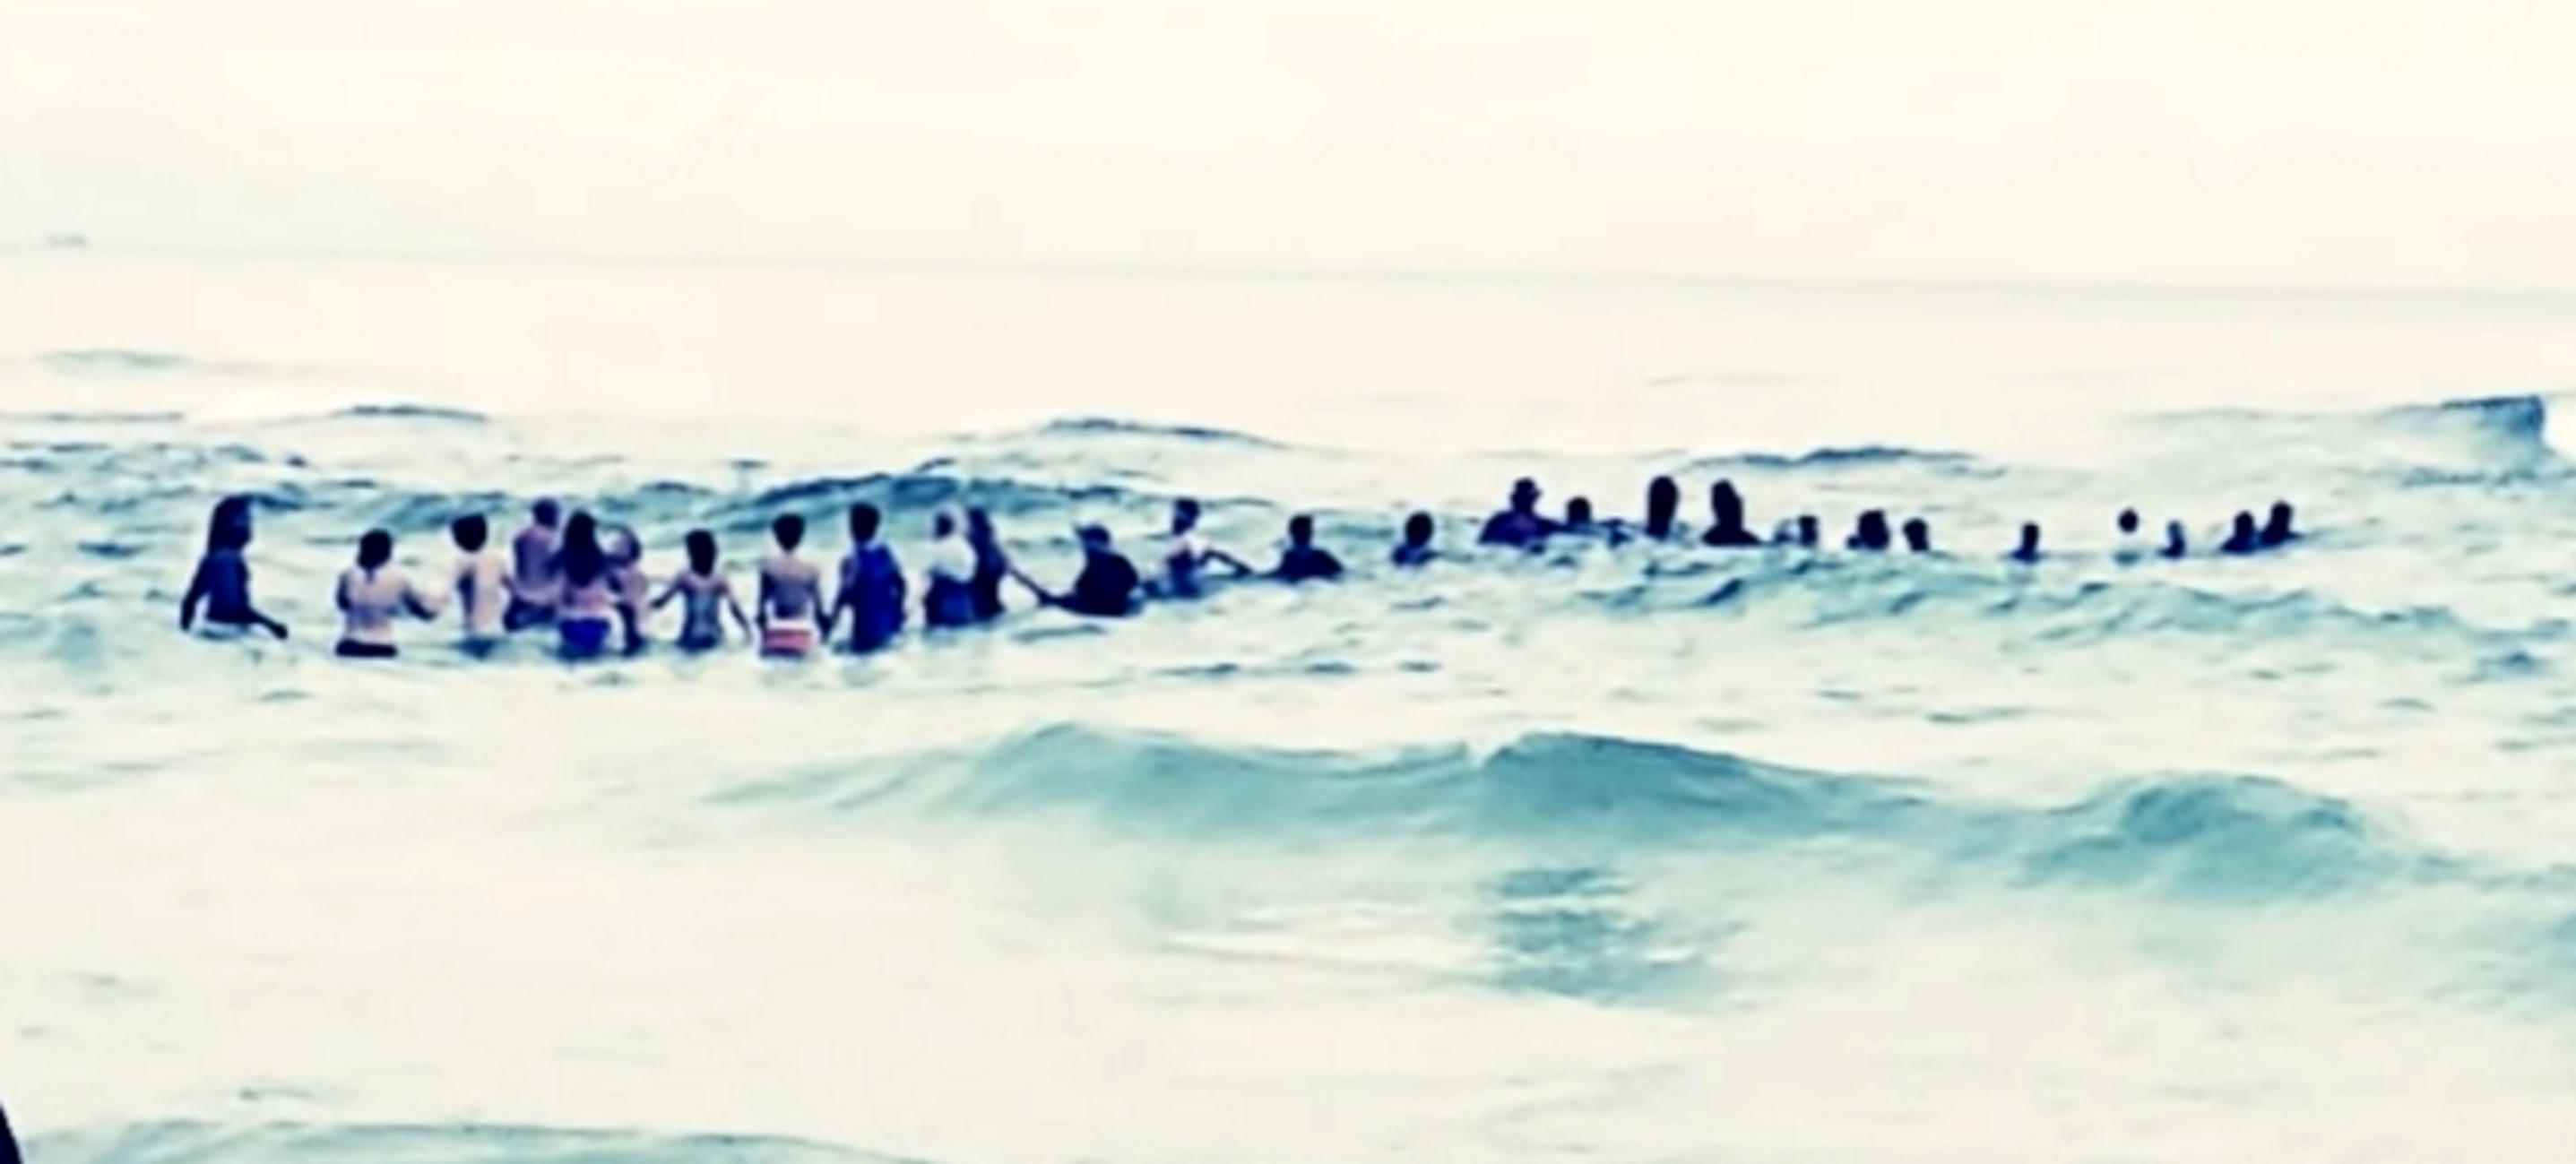 Una cadena humana de 80 personas salva la vida de una familia que se ahogaba